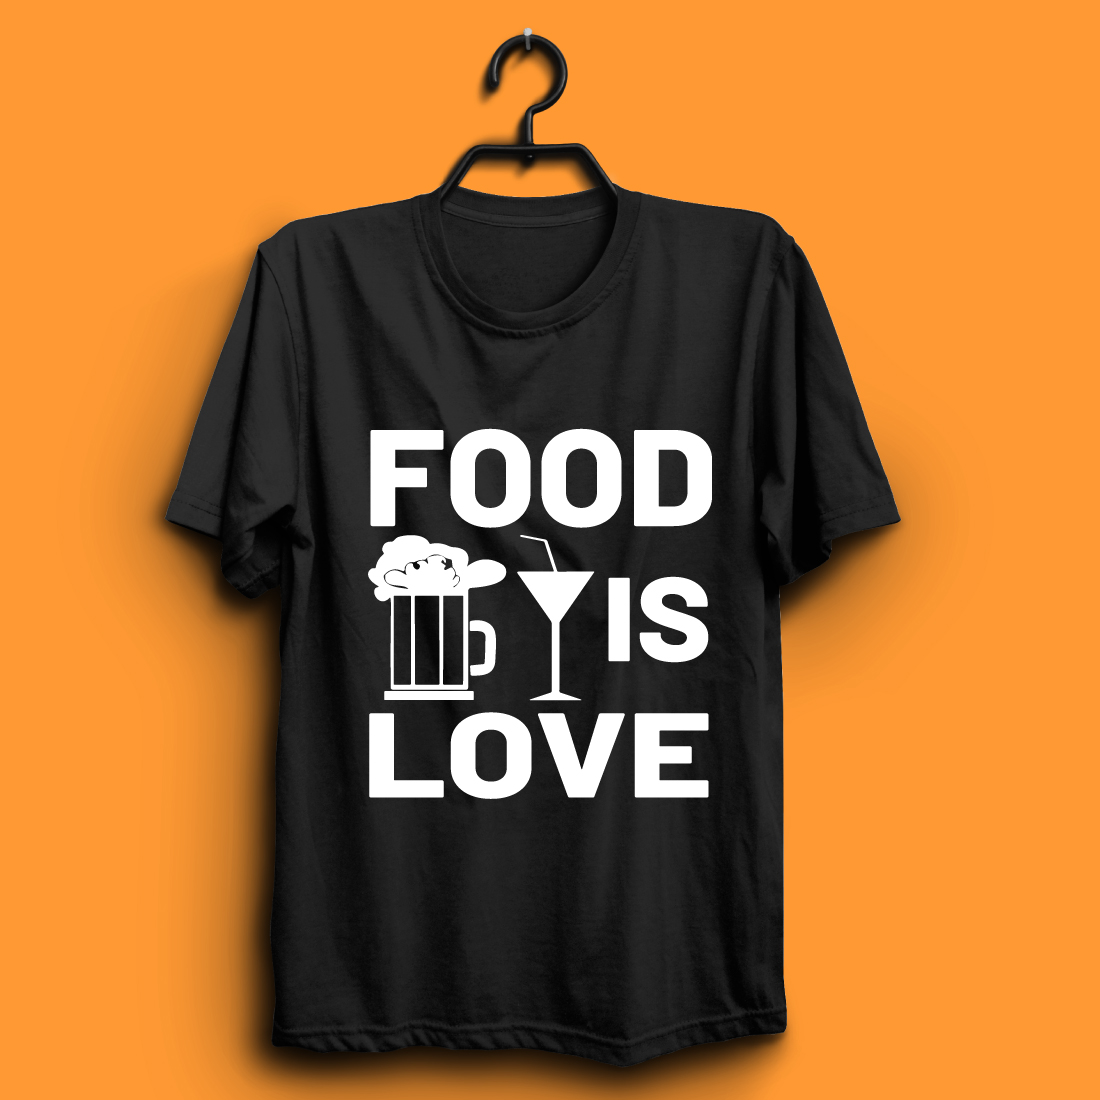 food t shirt design02 347